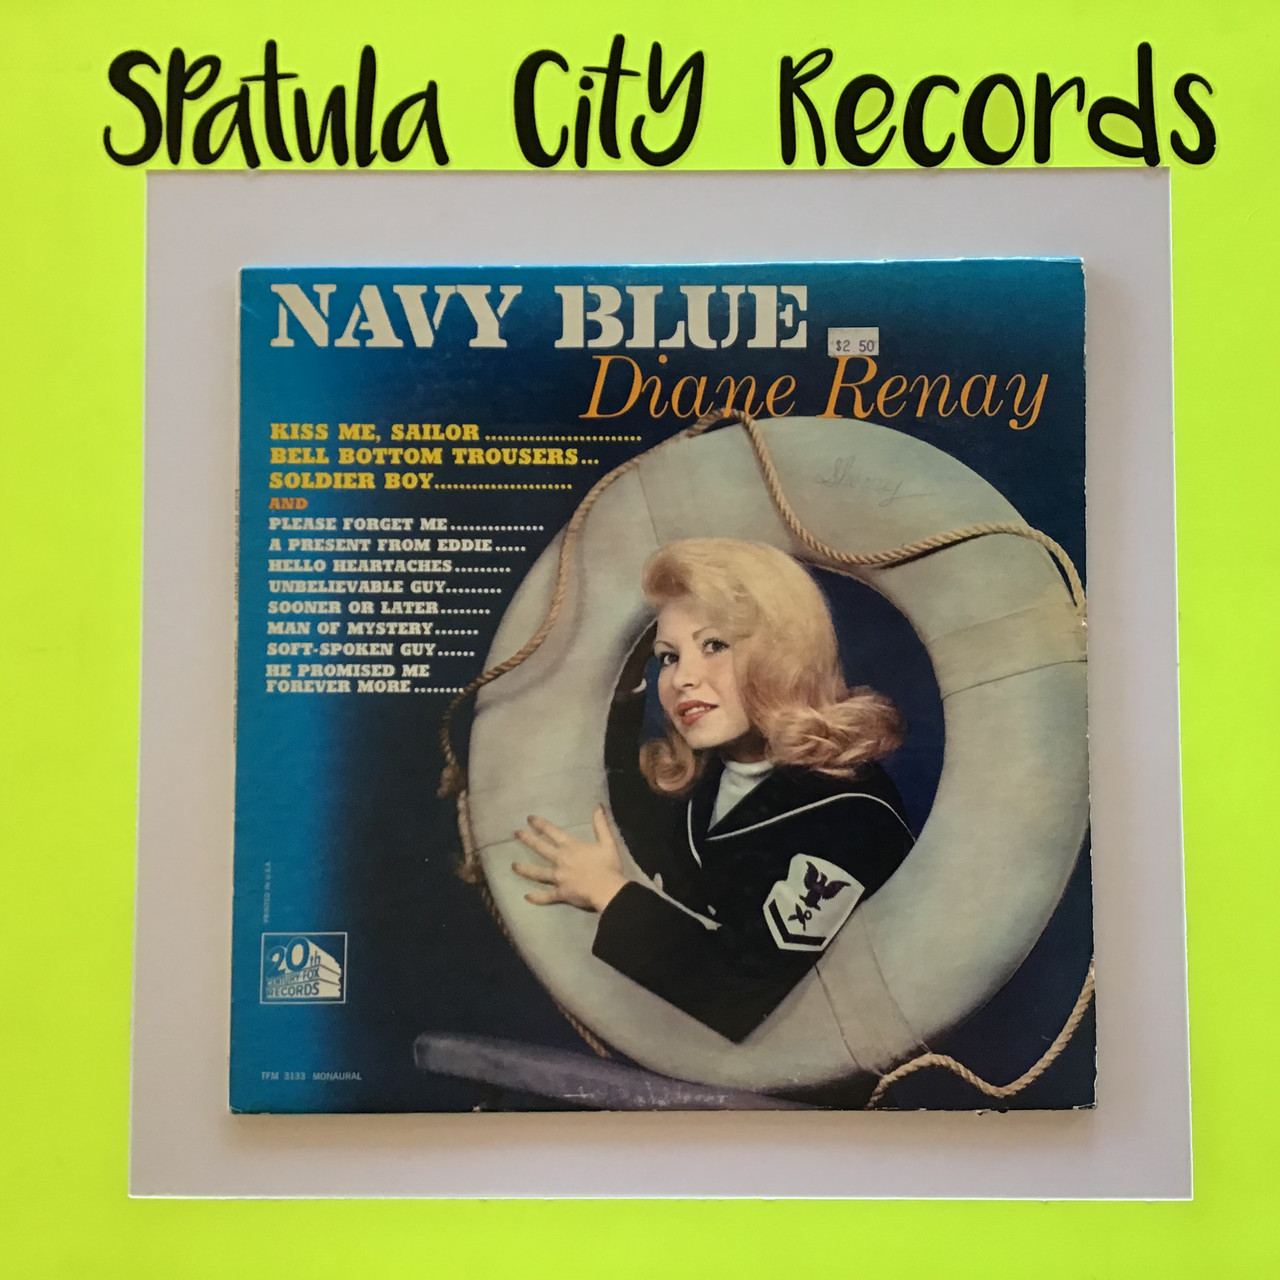 Diane Renay - Navy Blue - MONO - vinyl record LP